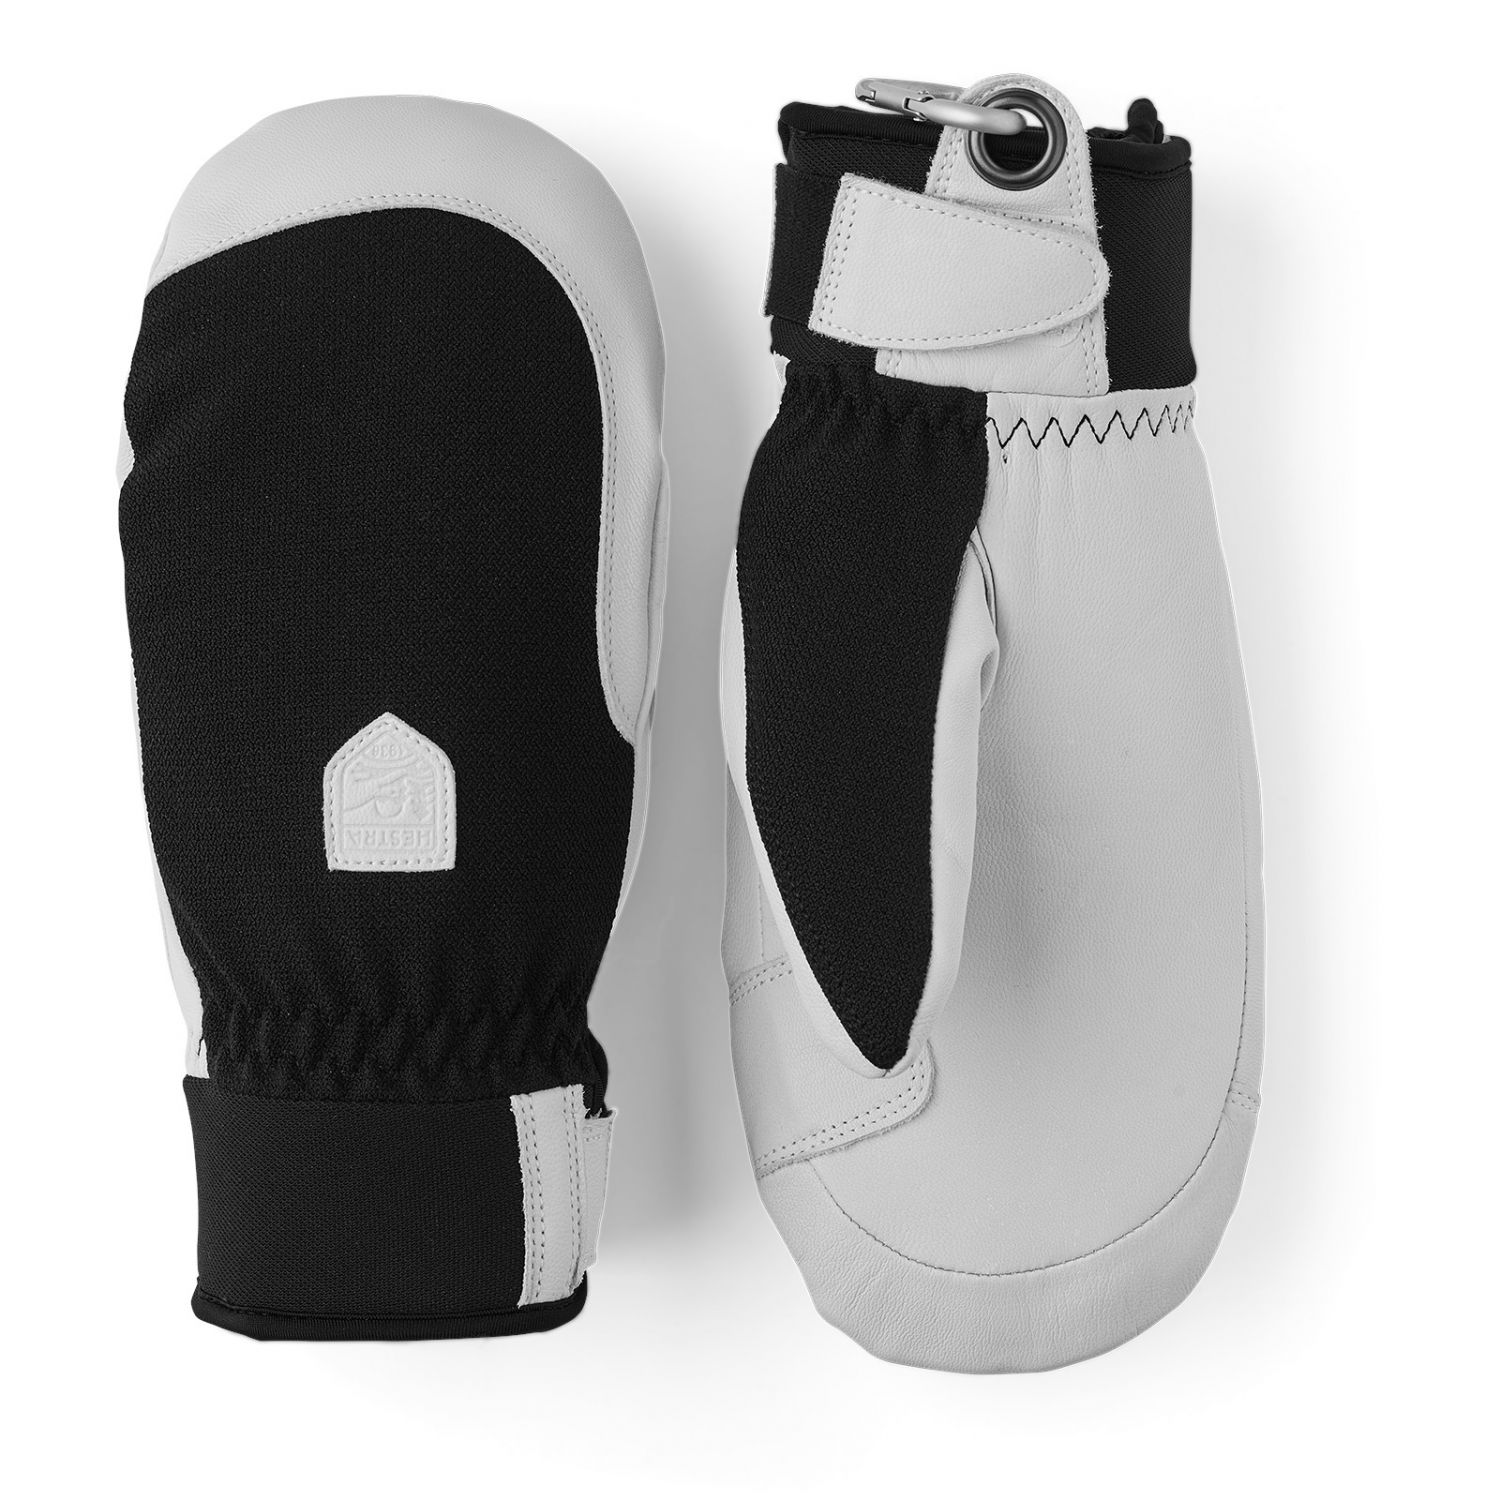 Hestra Army Leather Patrol gants de ski, femmes, noir